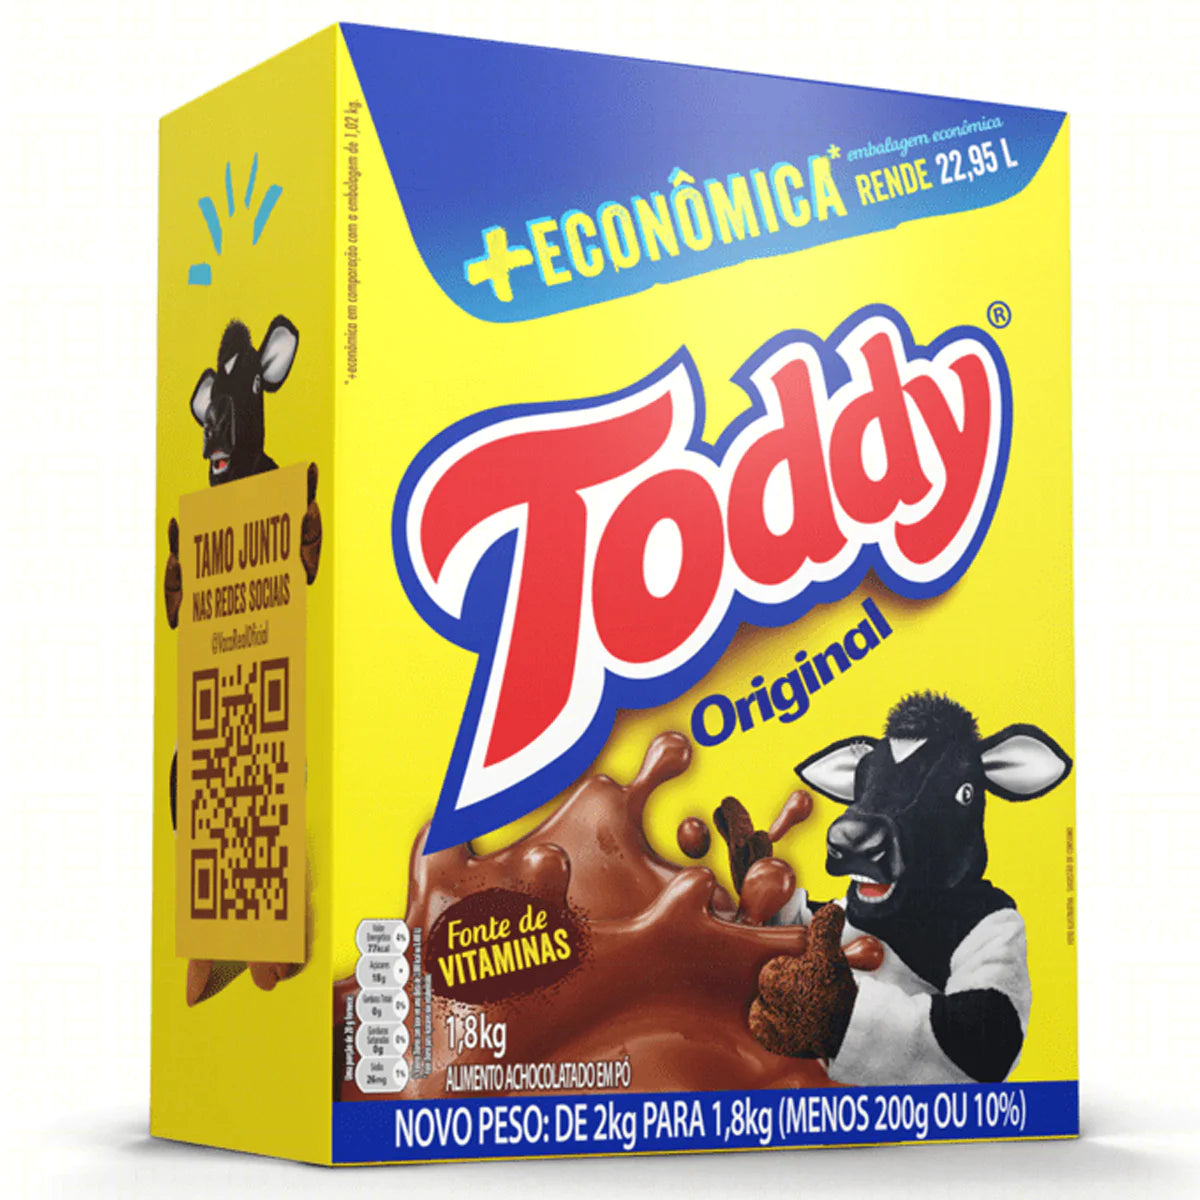 Comprar Achocolatado Toddynho Original 200ml